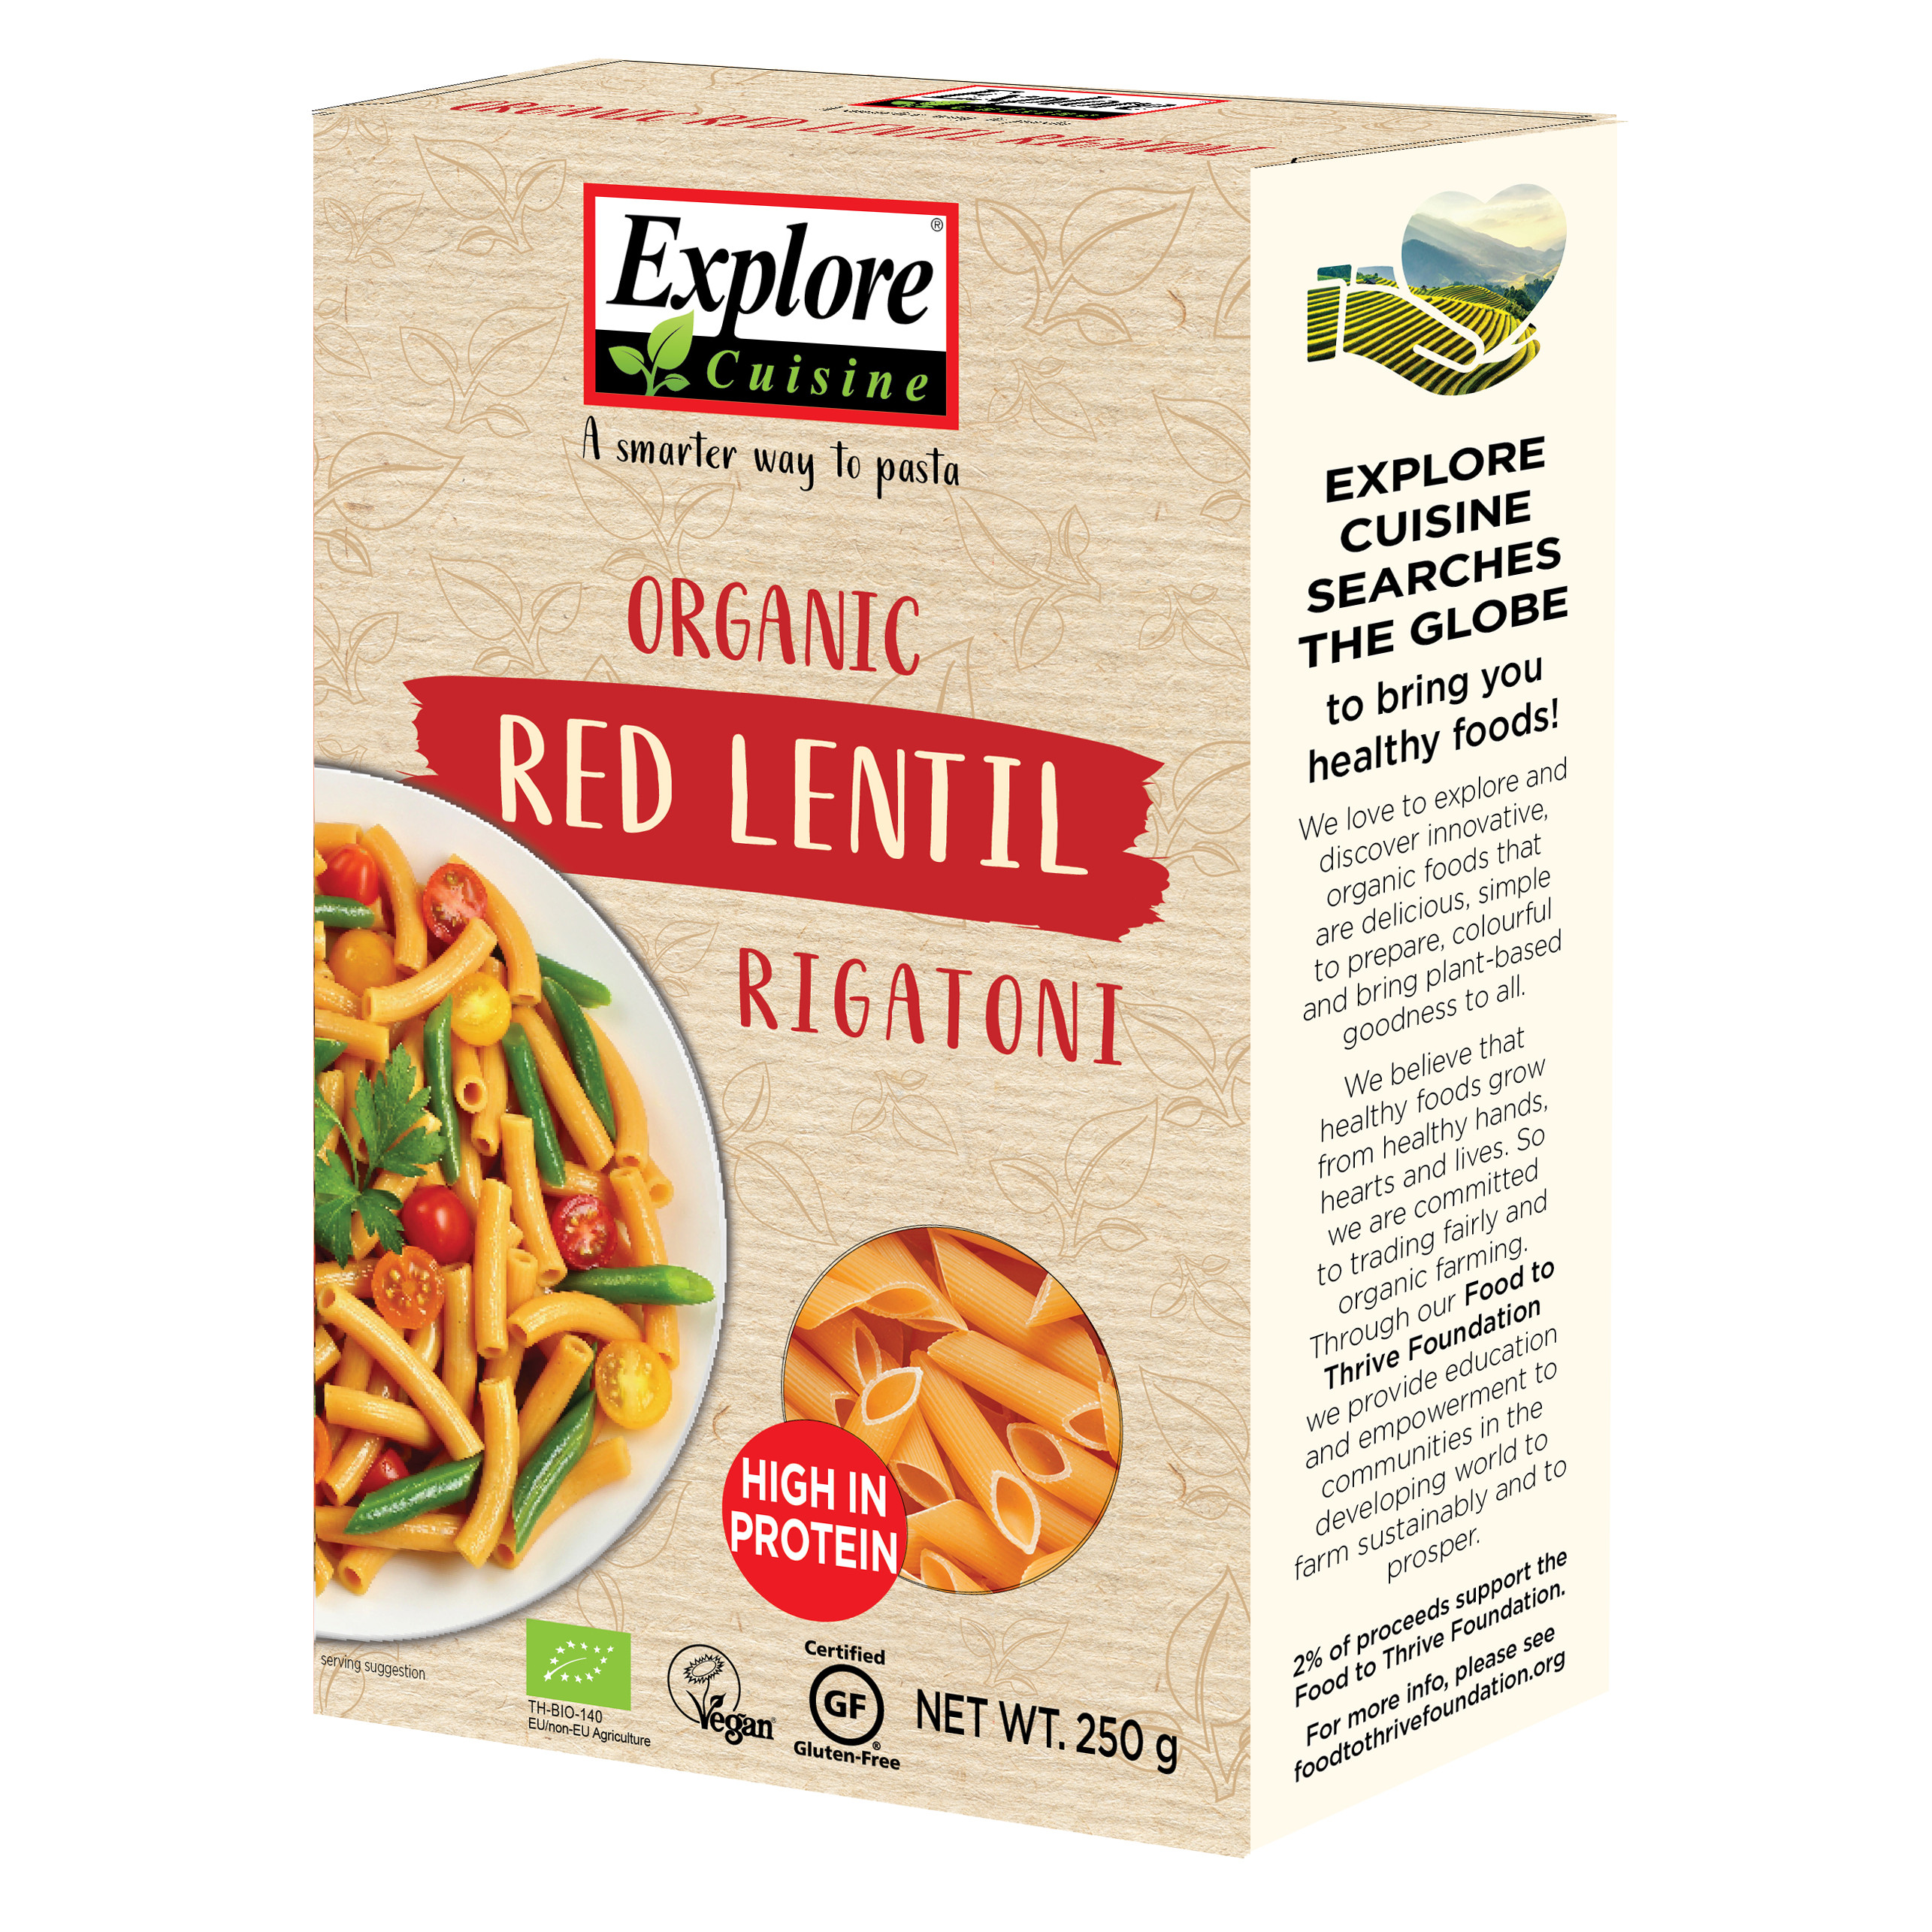 Nui Ống Đậu Lăng Đỏ Hữu Cơ Explore Cuisine (250g) - Explore Cuisine Red Lentil Organic